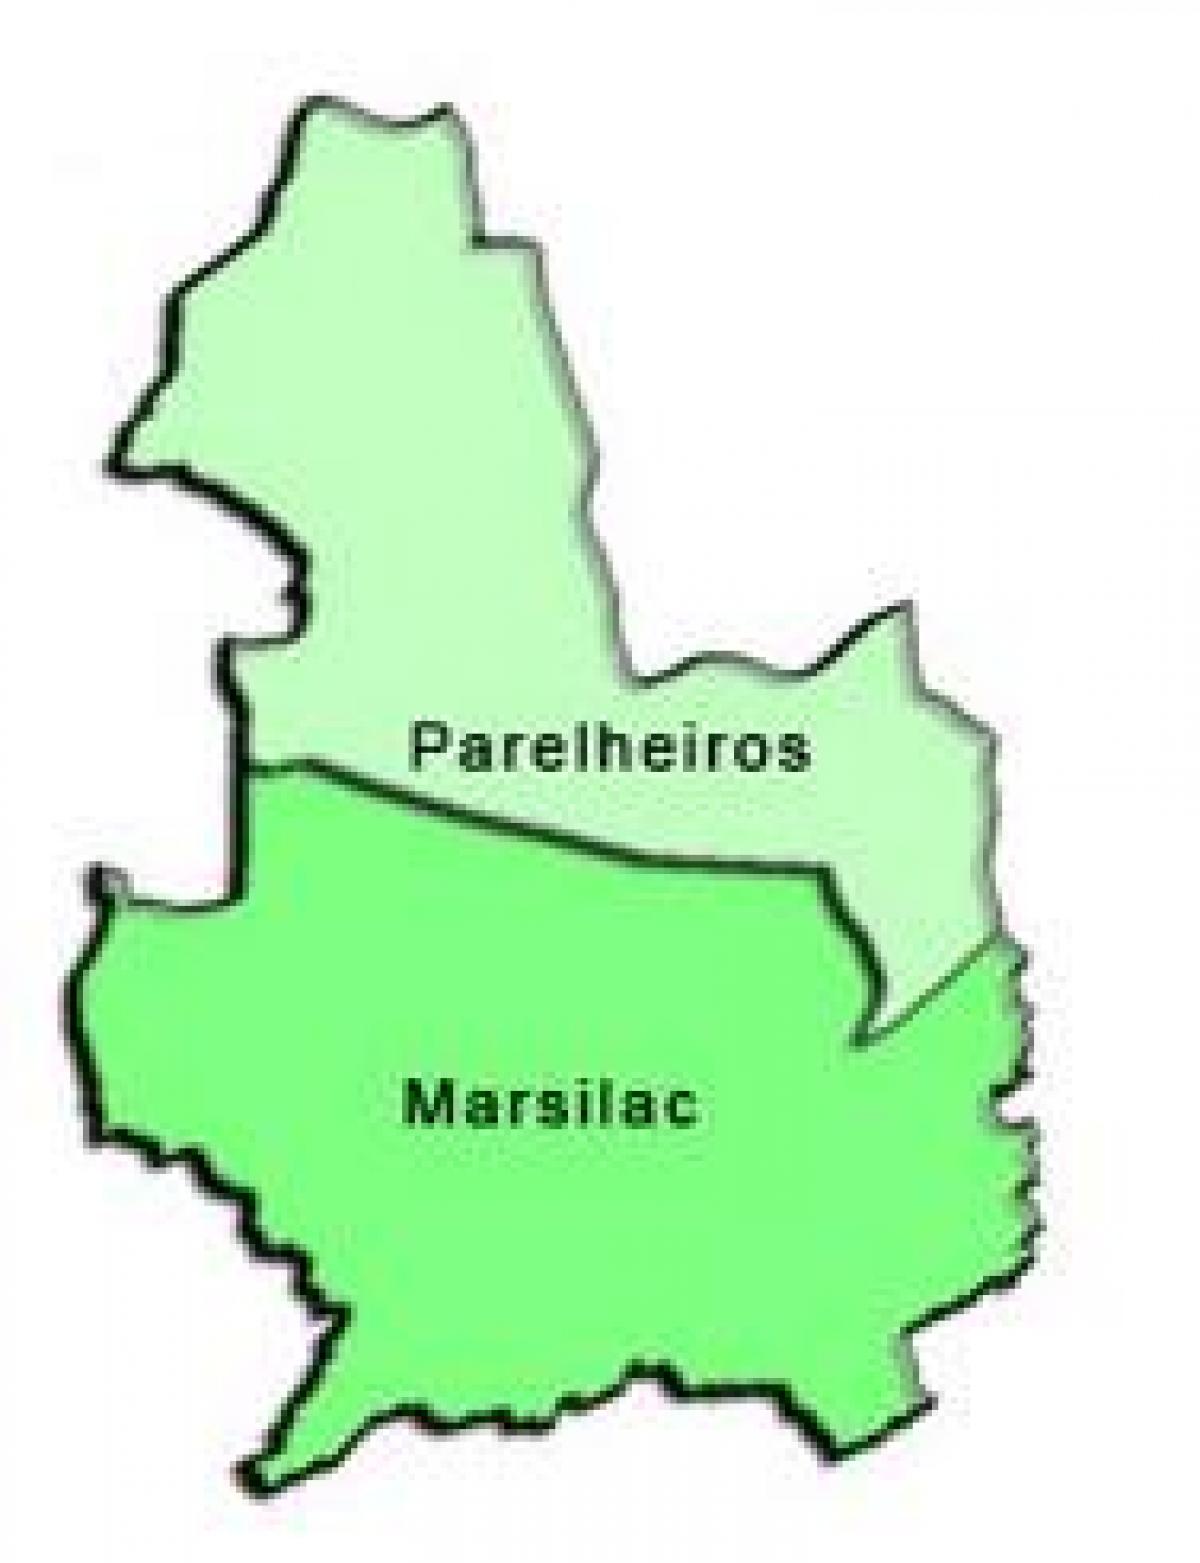 Bản đồ của Parelheiros, sub-tỉnh